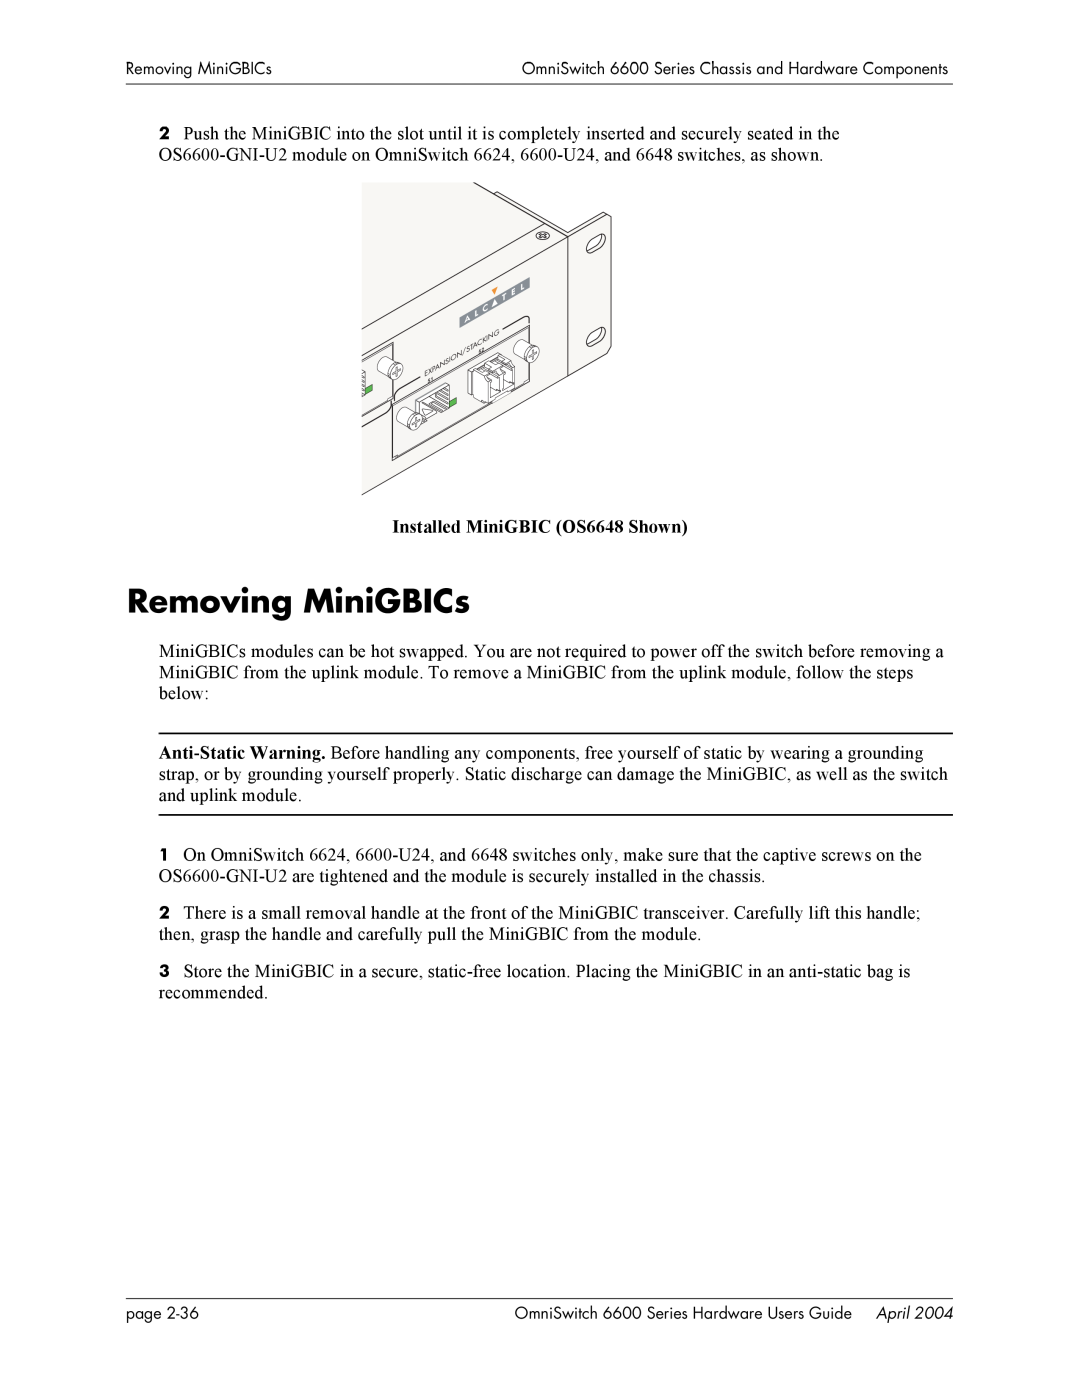 Alcatel-Lucent 6600 Series, 6624 manual Removing MiniGBICs, Installed MiniGBIC OS6648 Shown 